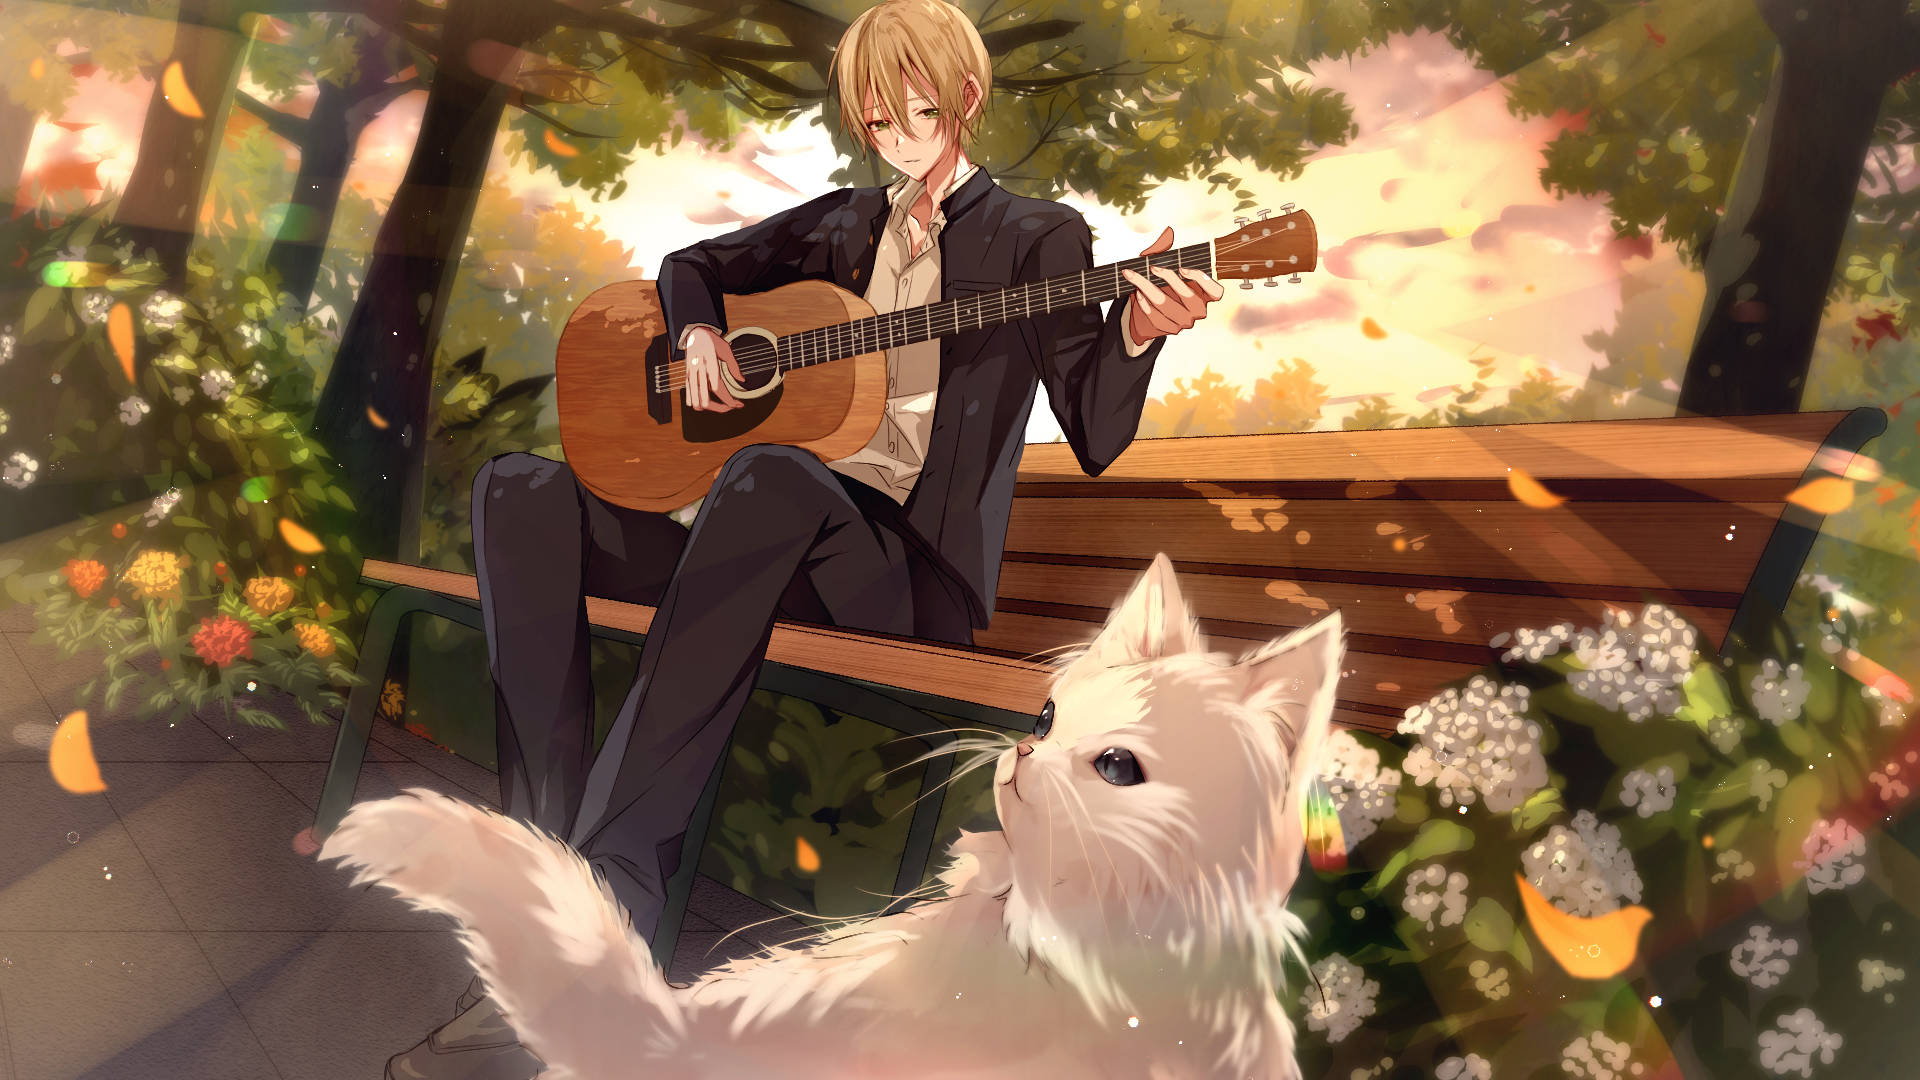 Aesthetic Anime Boy Playing Guitar